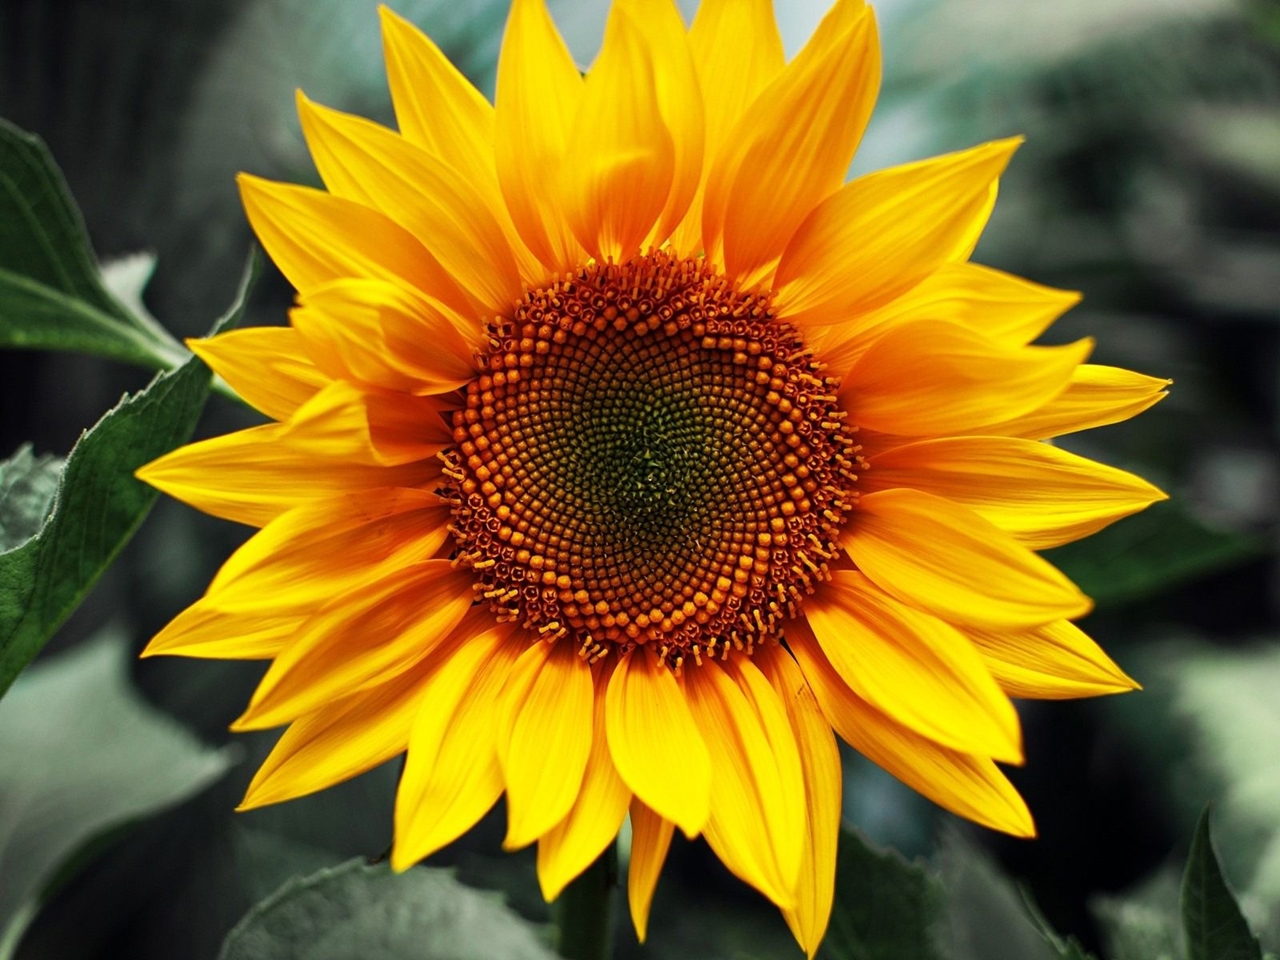 Photos of sunflowers 02